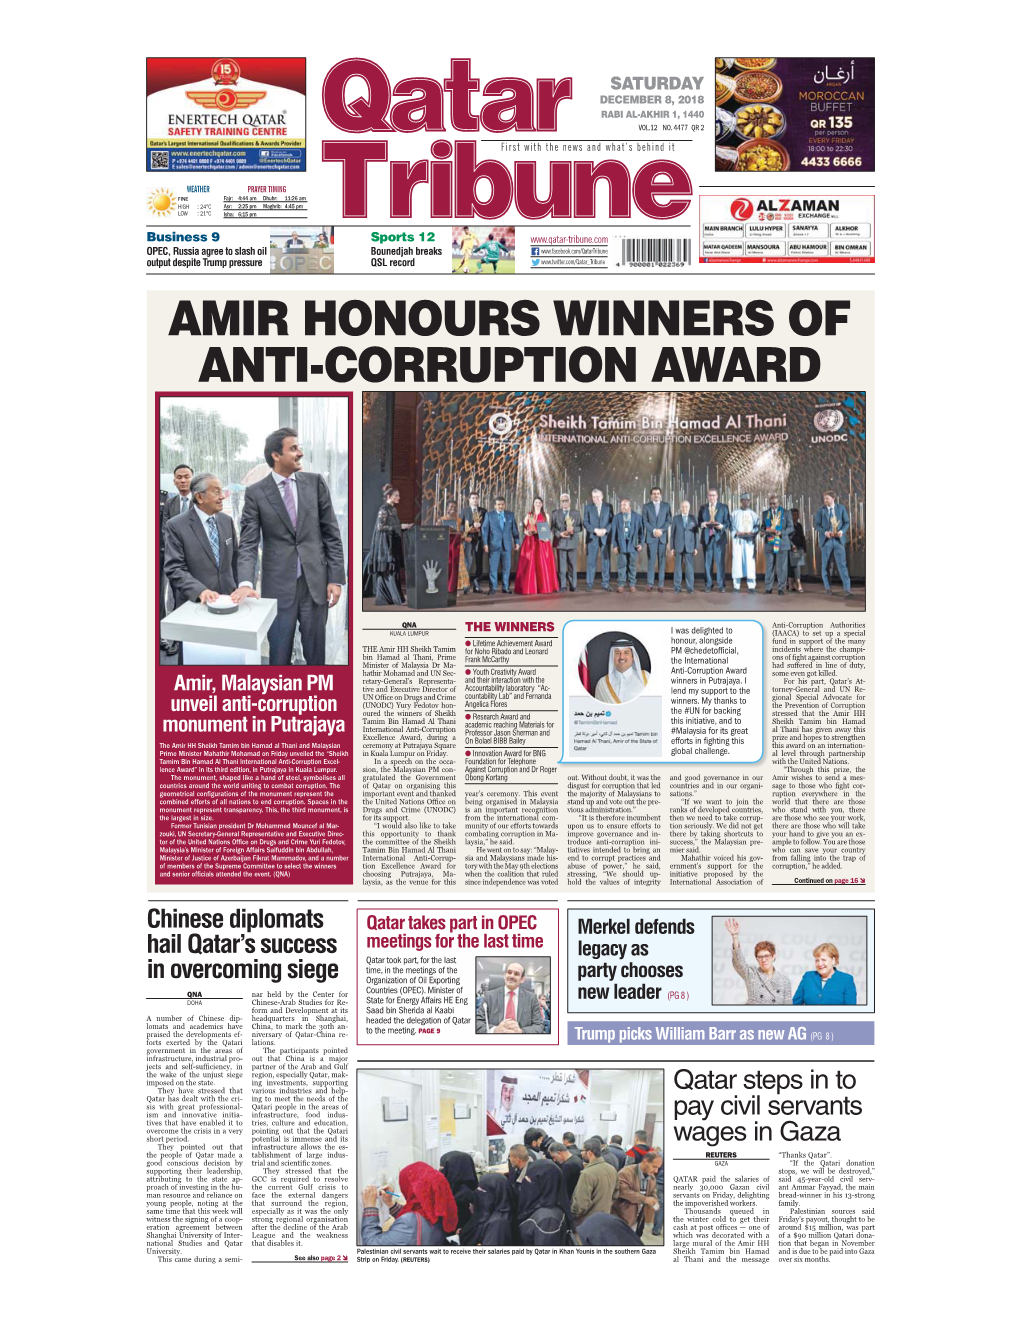 Amir Honours Winners of Anti-Corruption Award